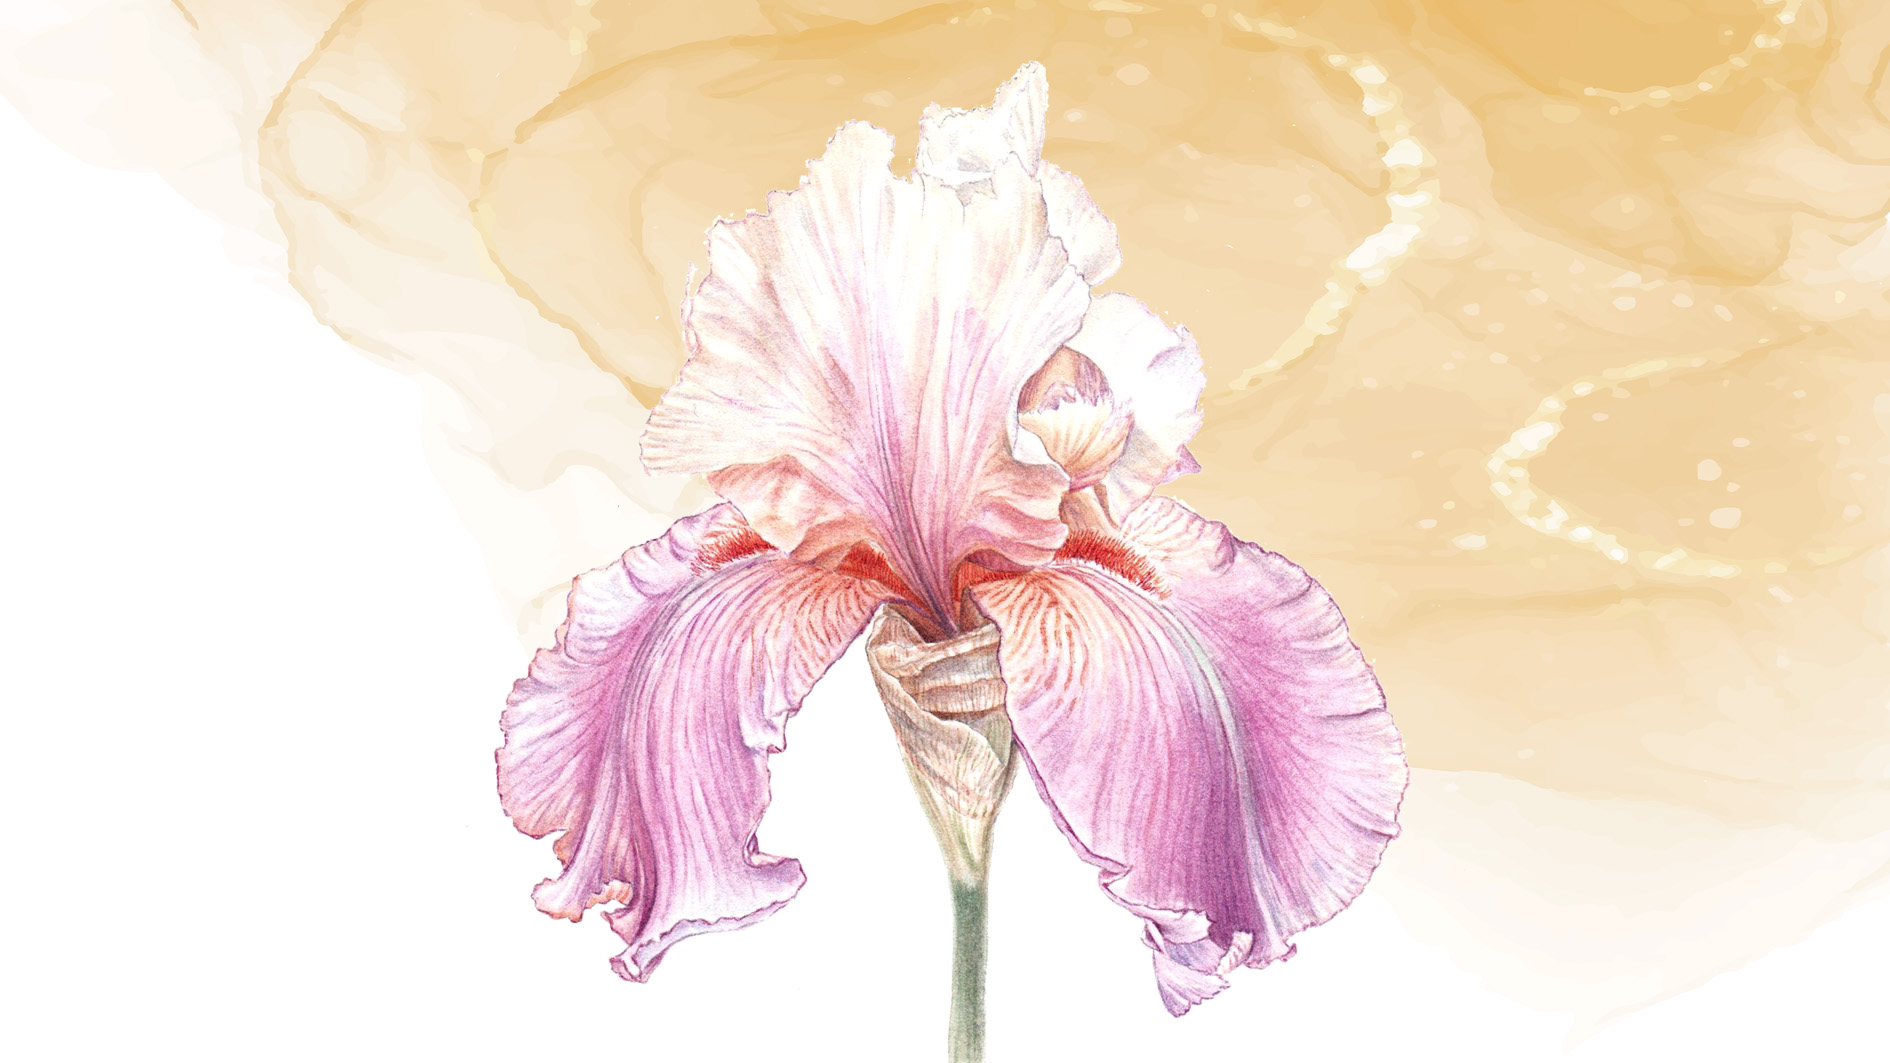 Du 2 au 30/04 – Expo « Illustrations botaniques » de Martina Rajtmajerova